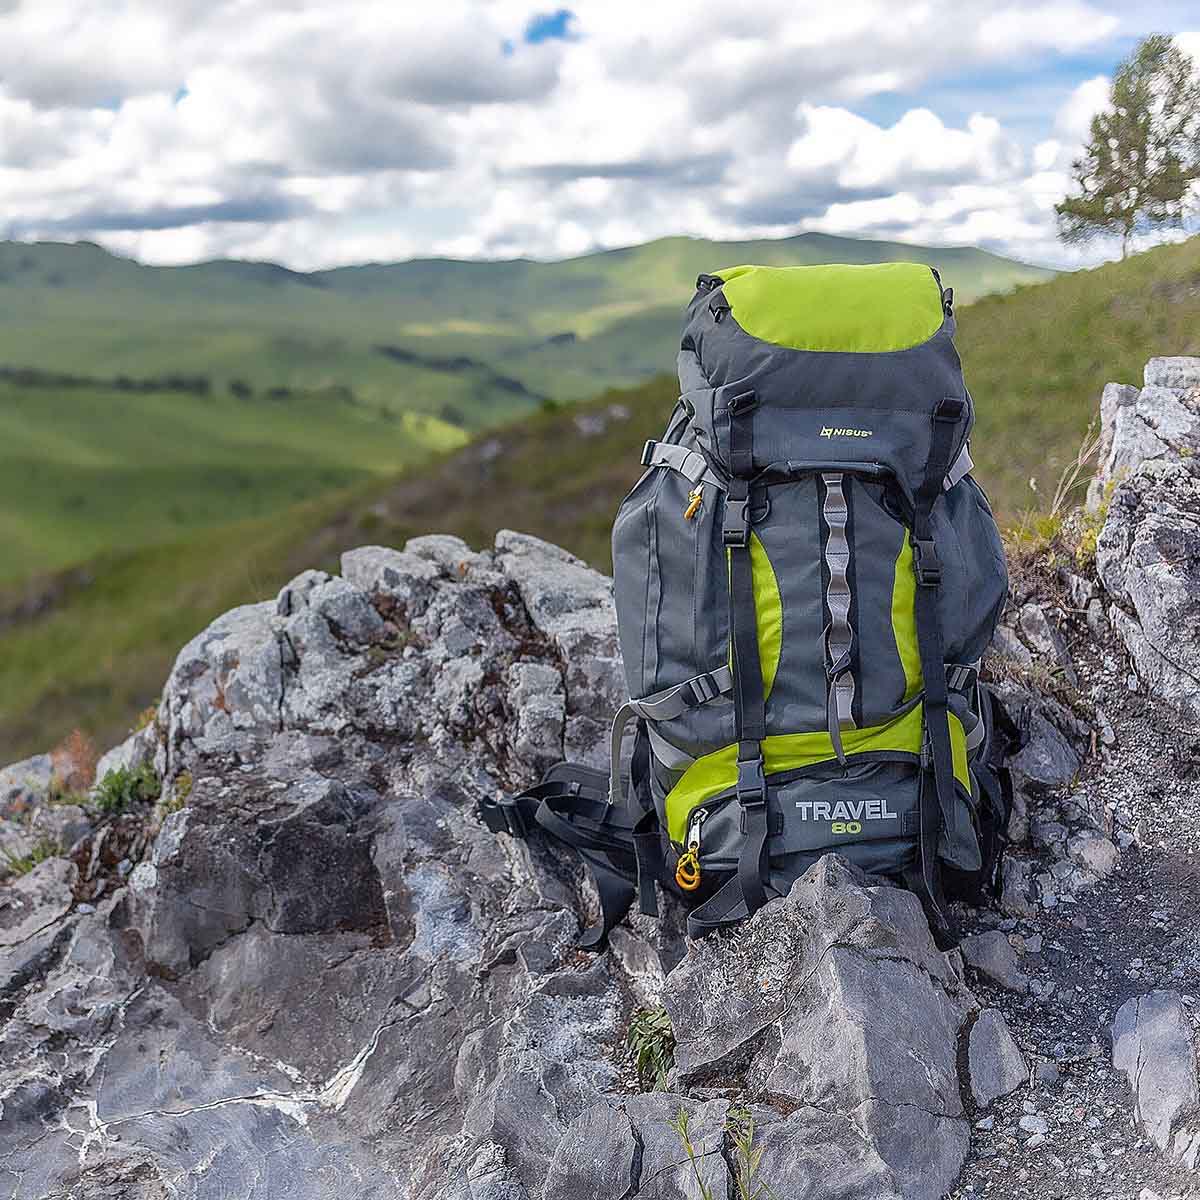 80 Liter Large Multi Day Framed Backpack for Hiking with Height-Adjustable Back